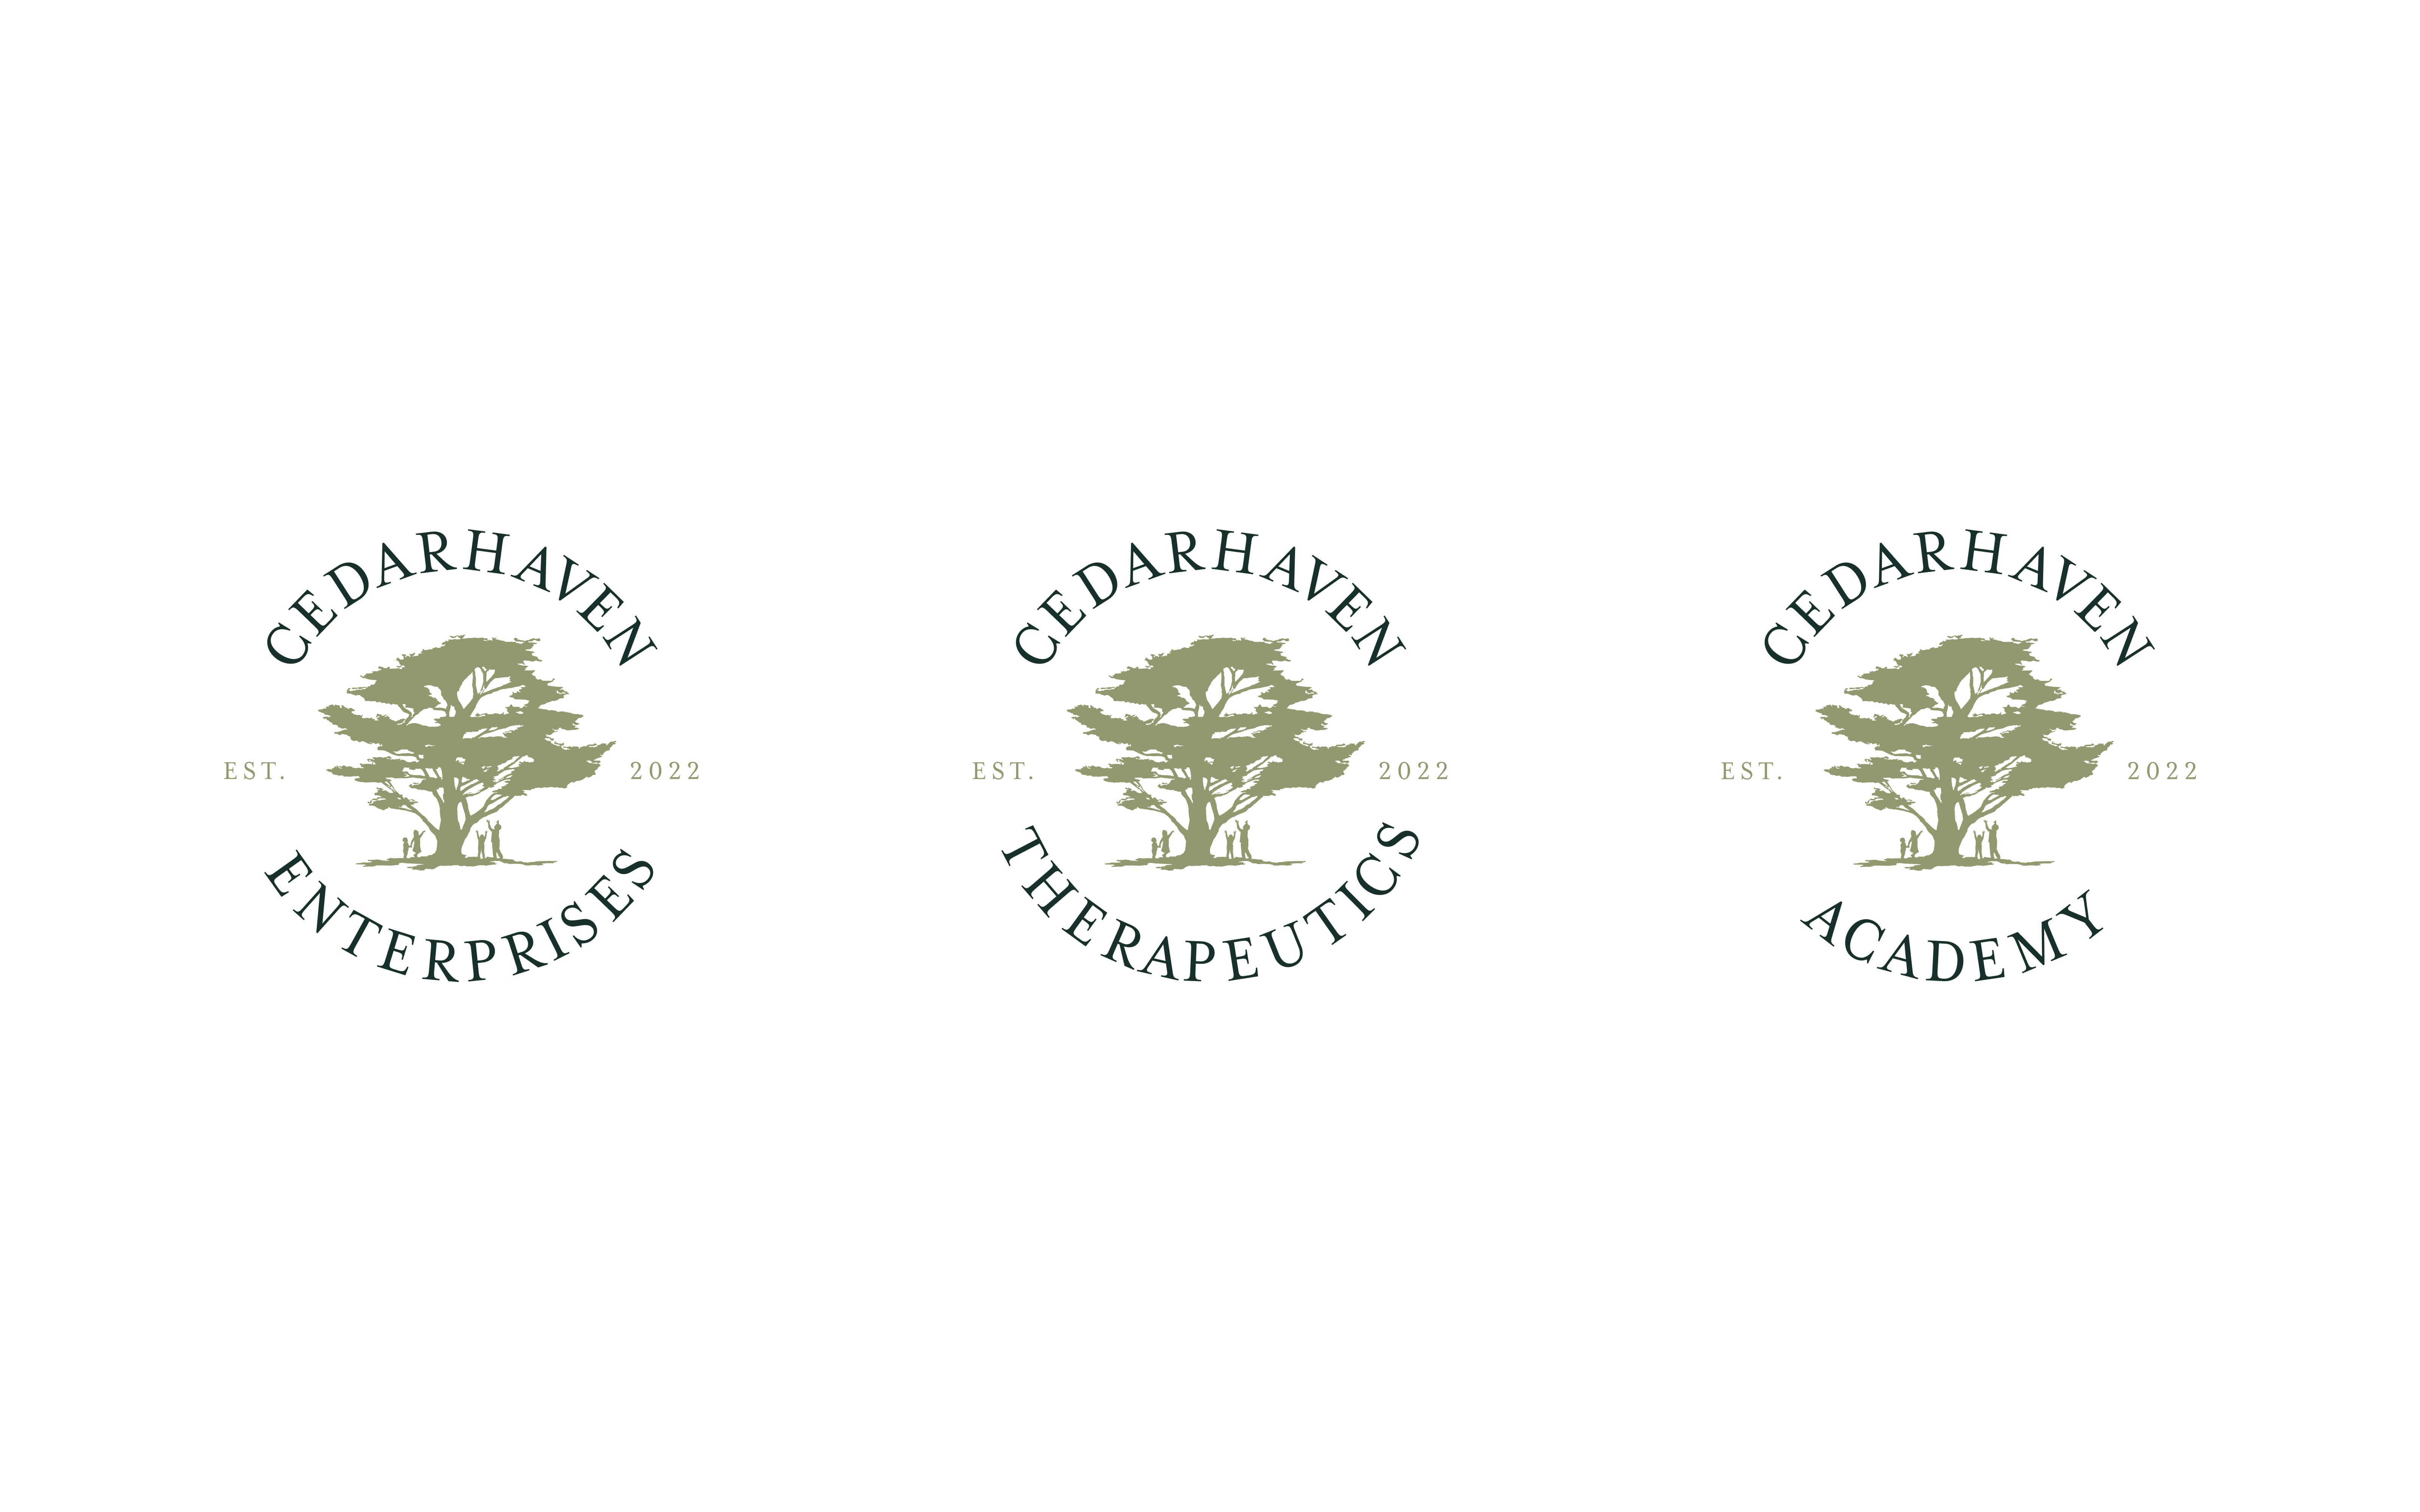 Cedarhaven Enterprises Logomarks